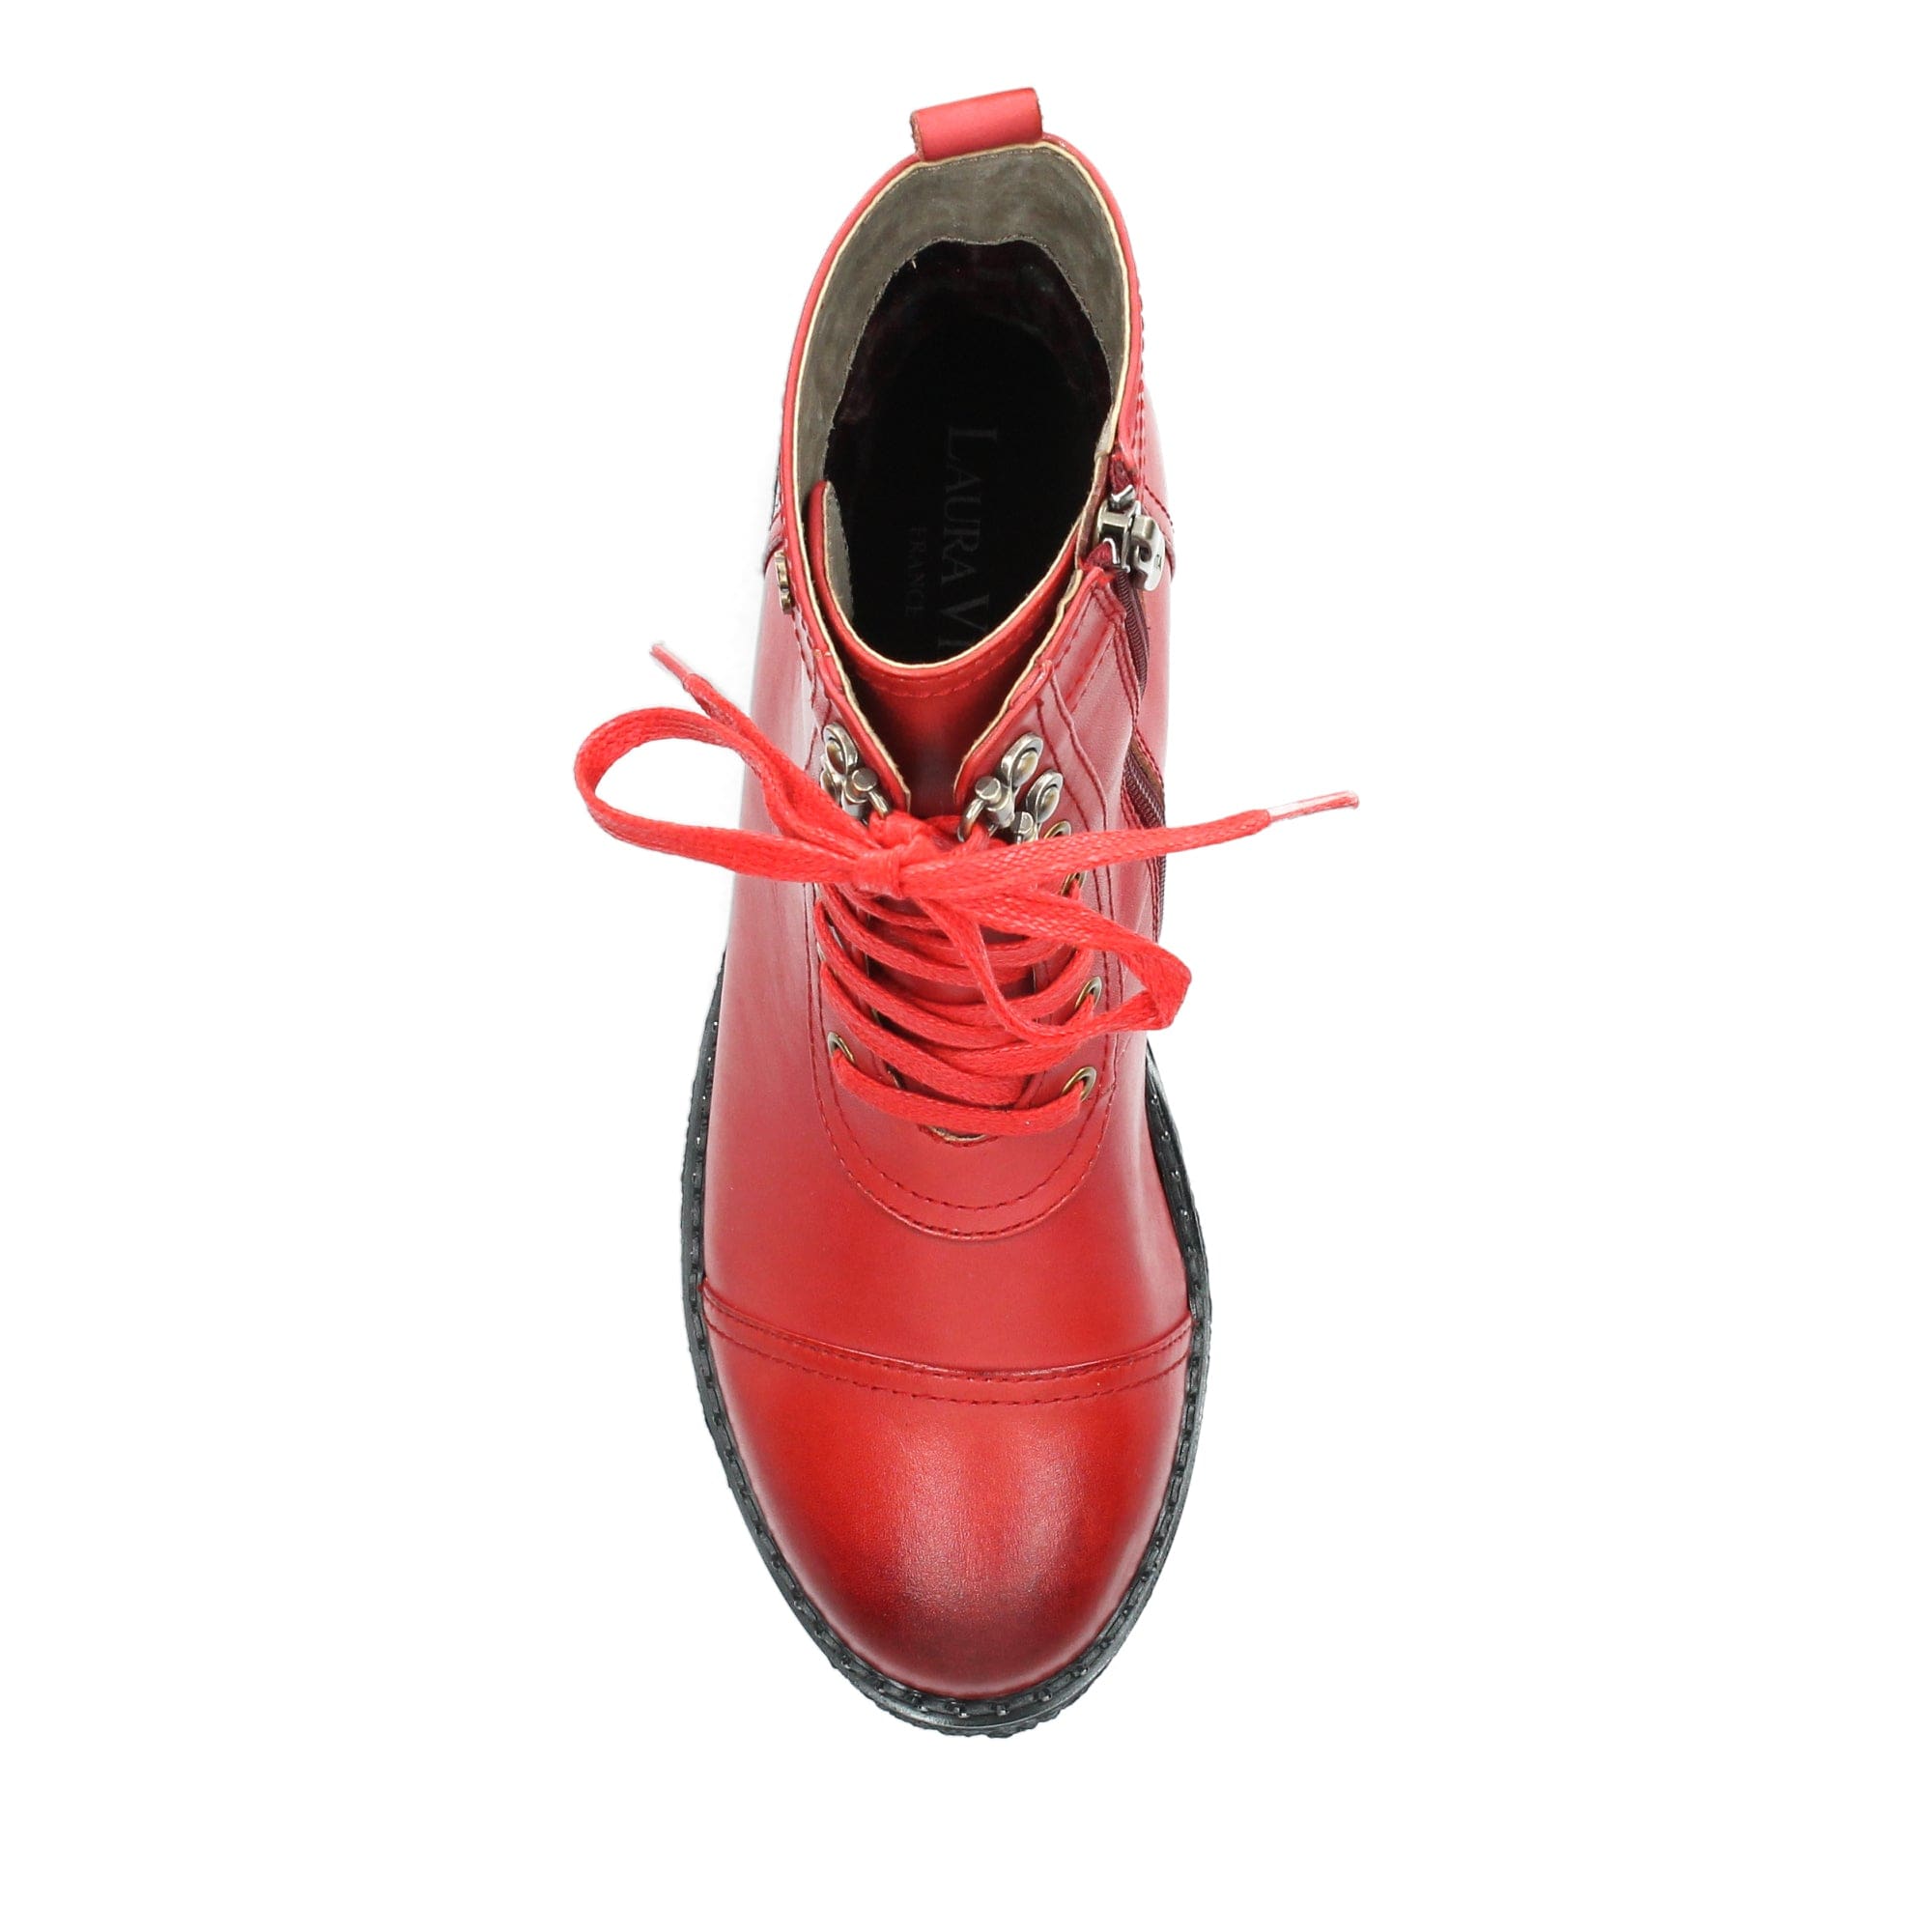 Shoe IDCITEO 02 - Boots